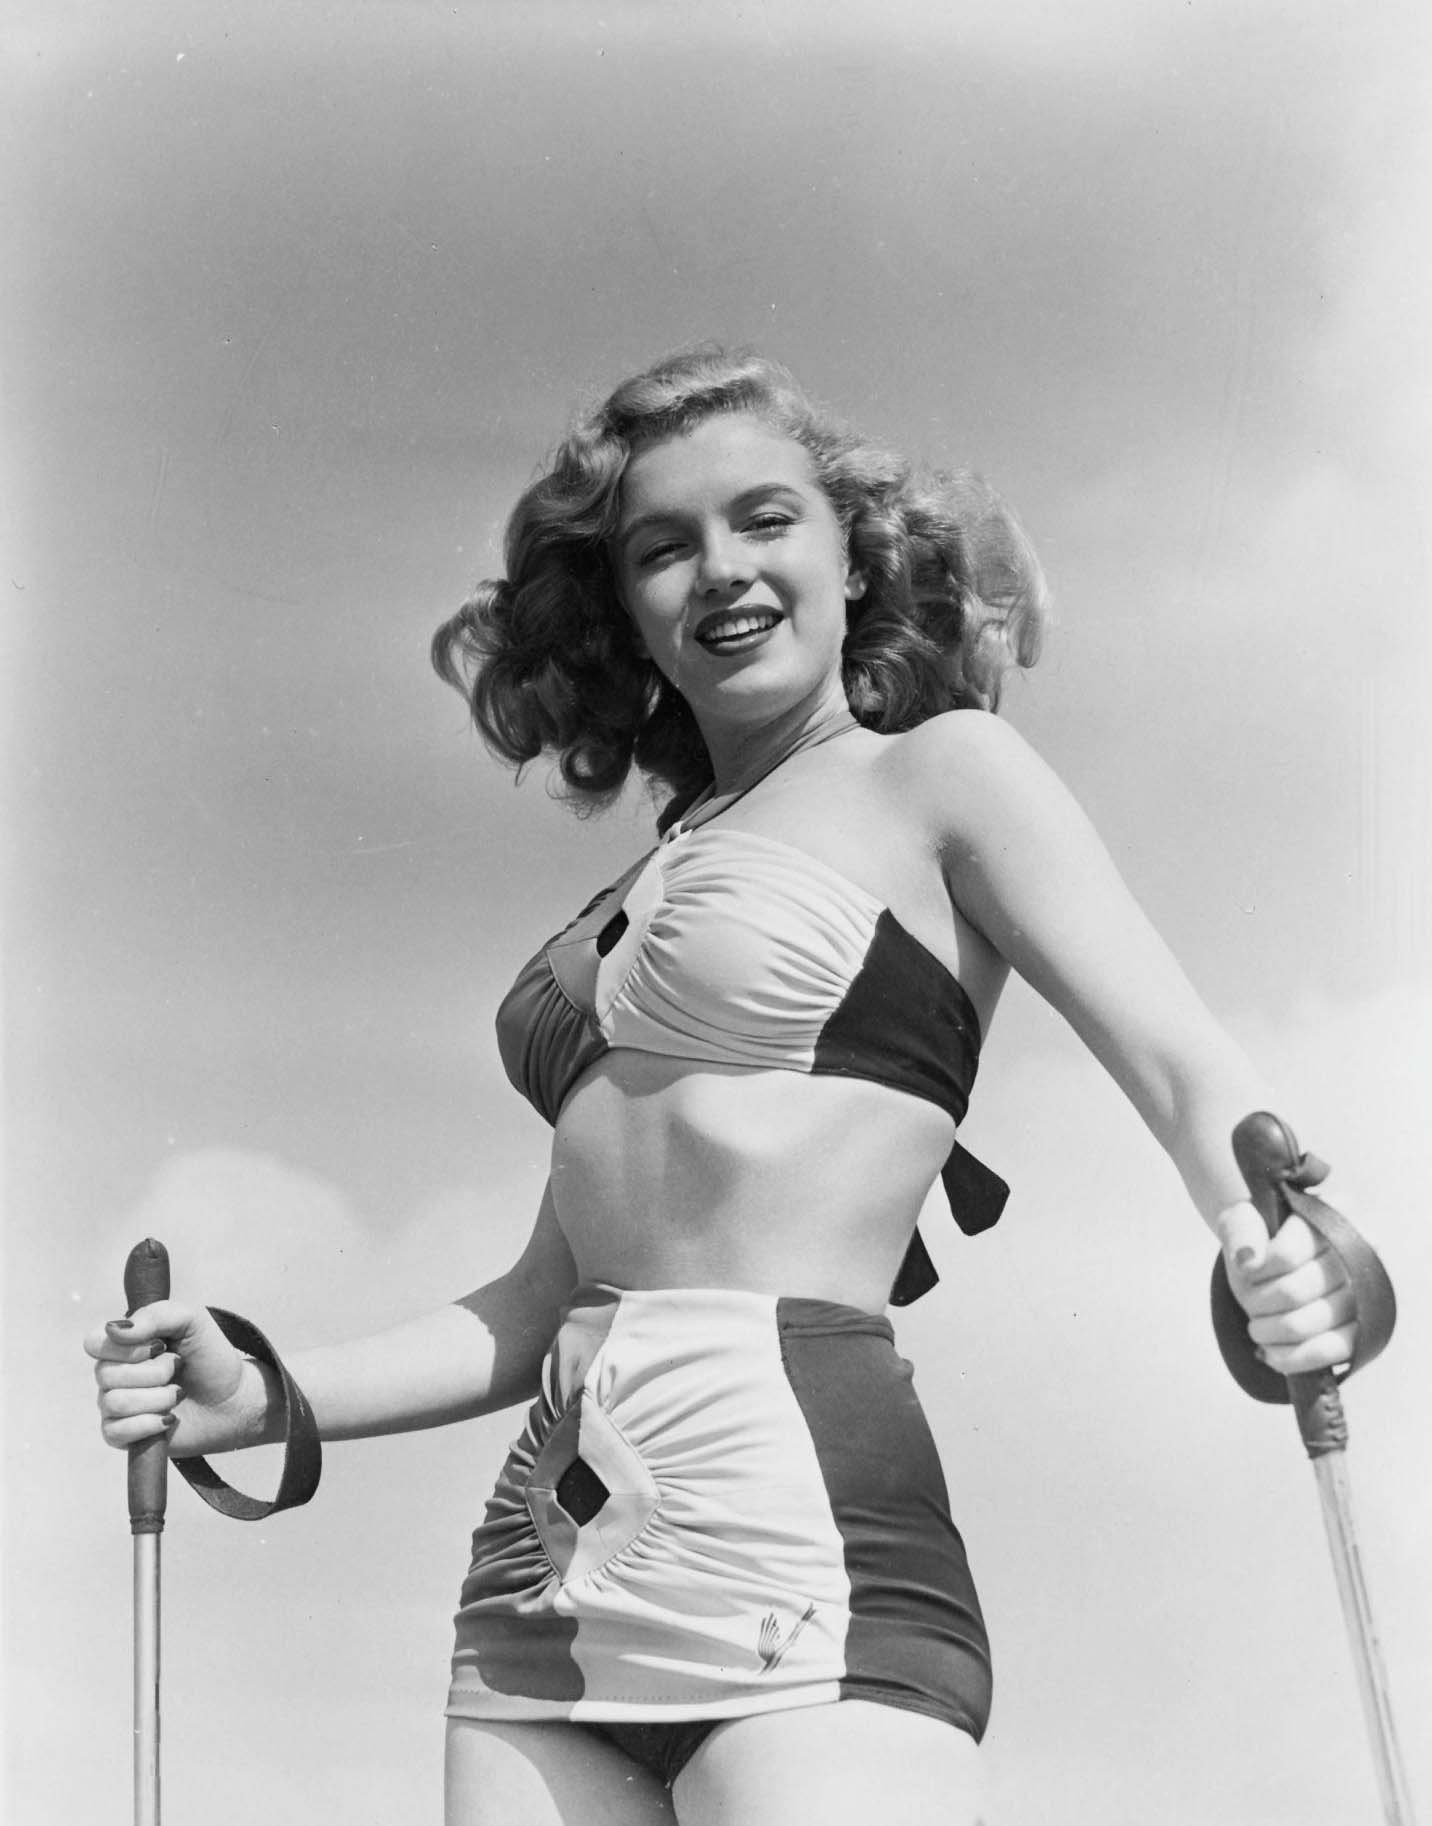 Marilyn Monroe sand skiing, 1943.